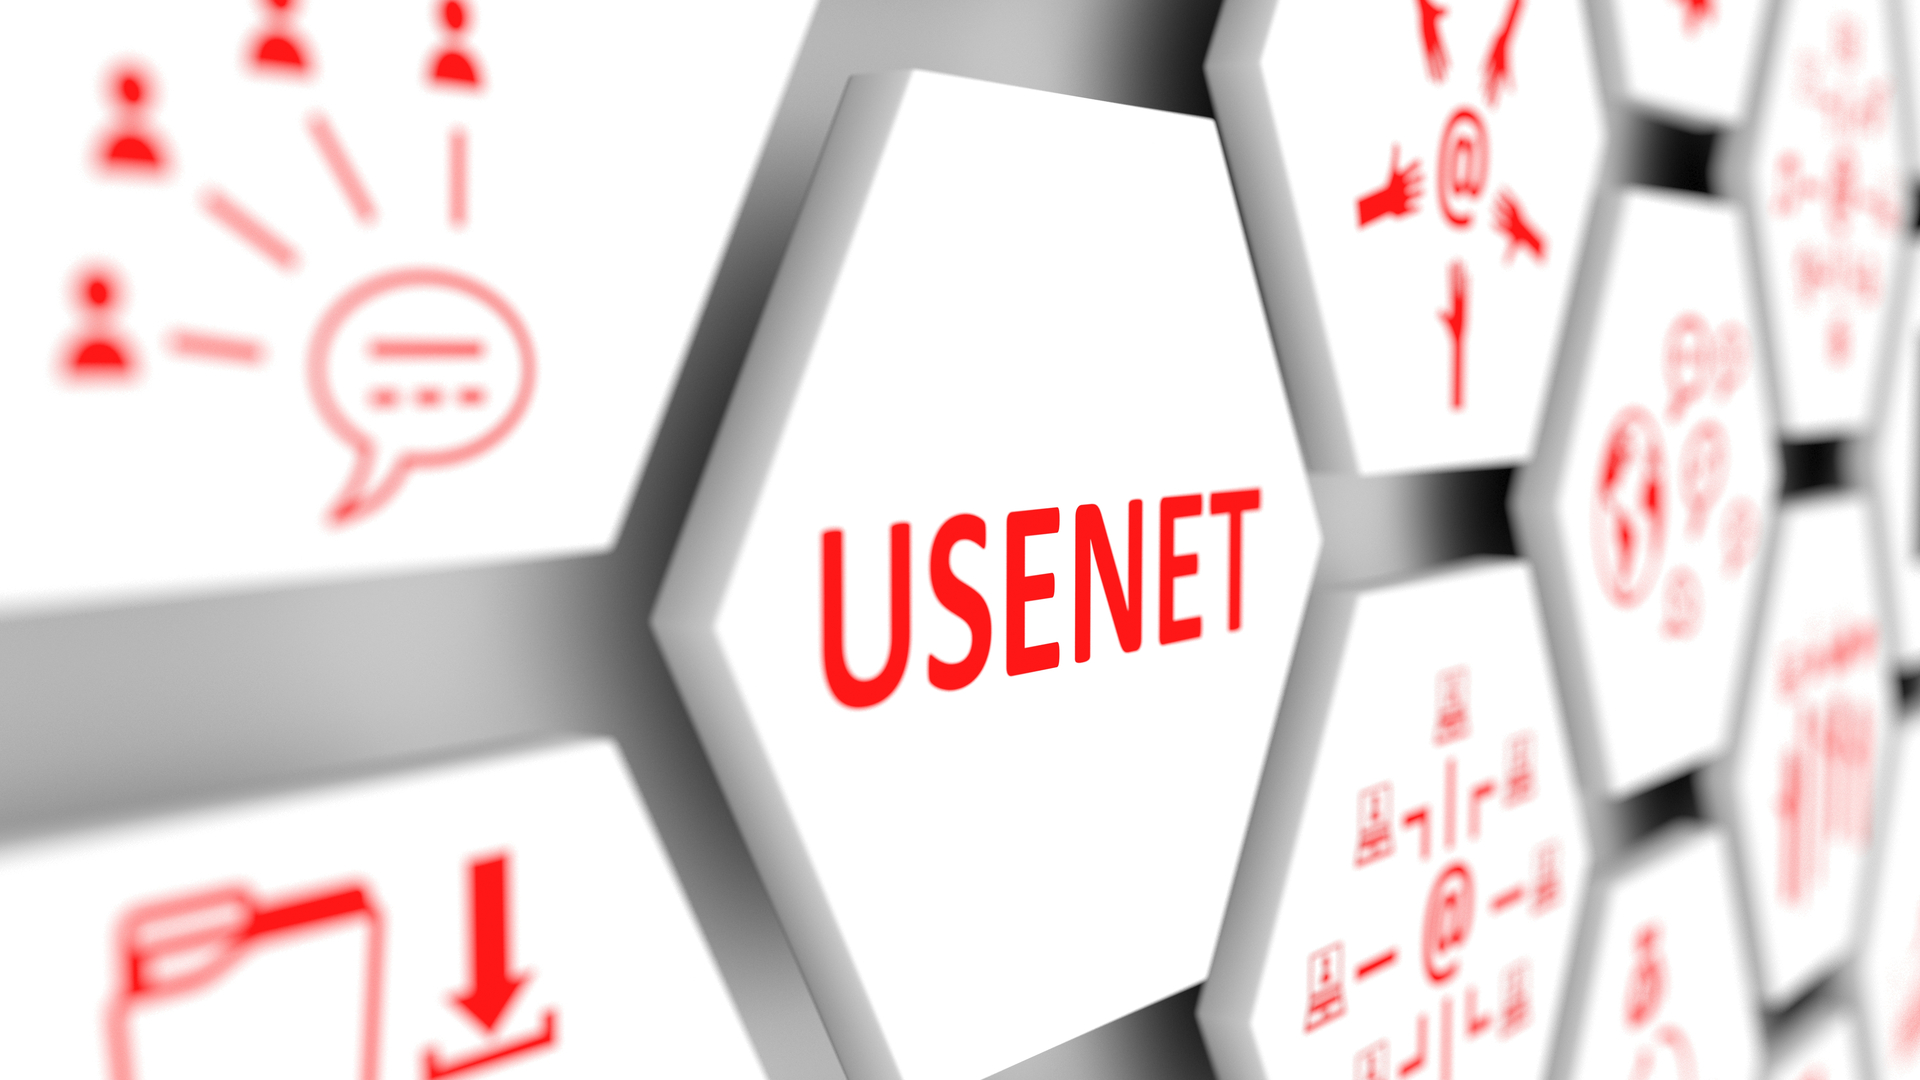 Usenet service provider